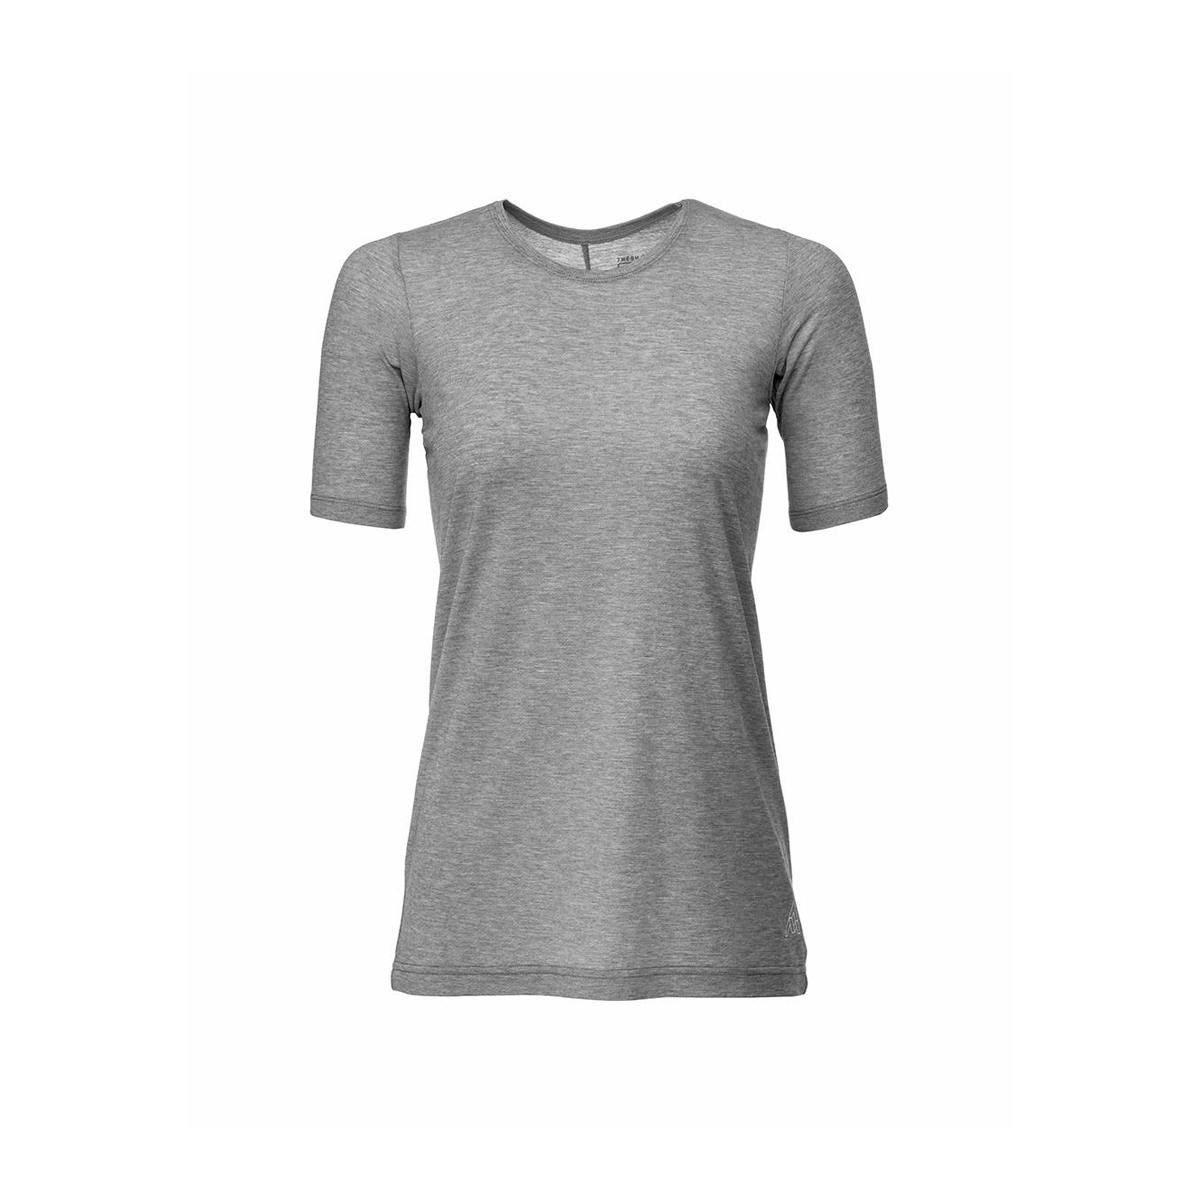 7Mesh Elevate Women's T-Shirt SS - Pebble Grey - XS